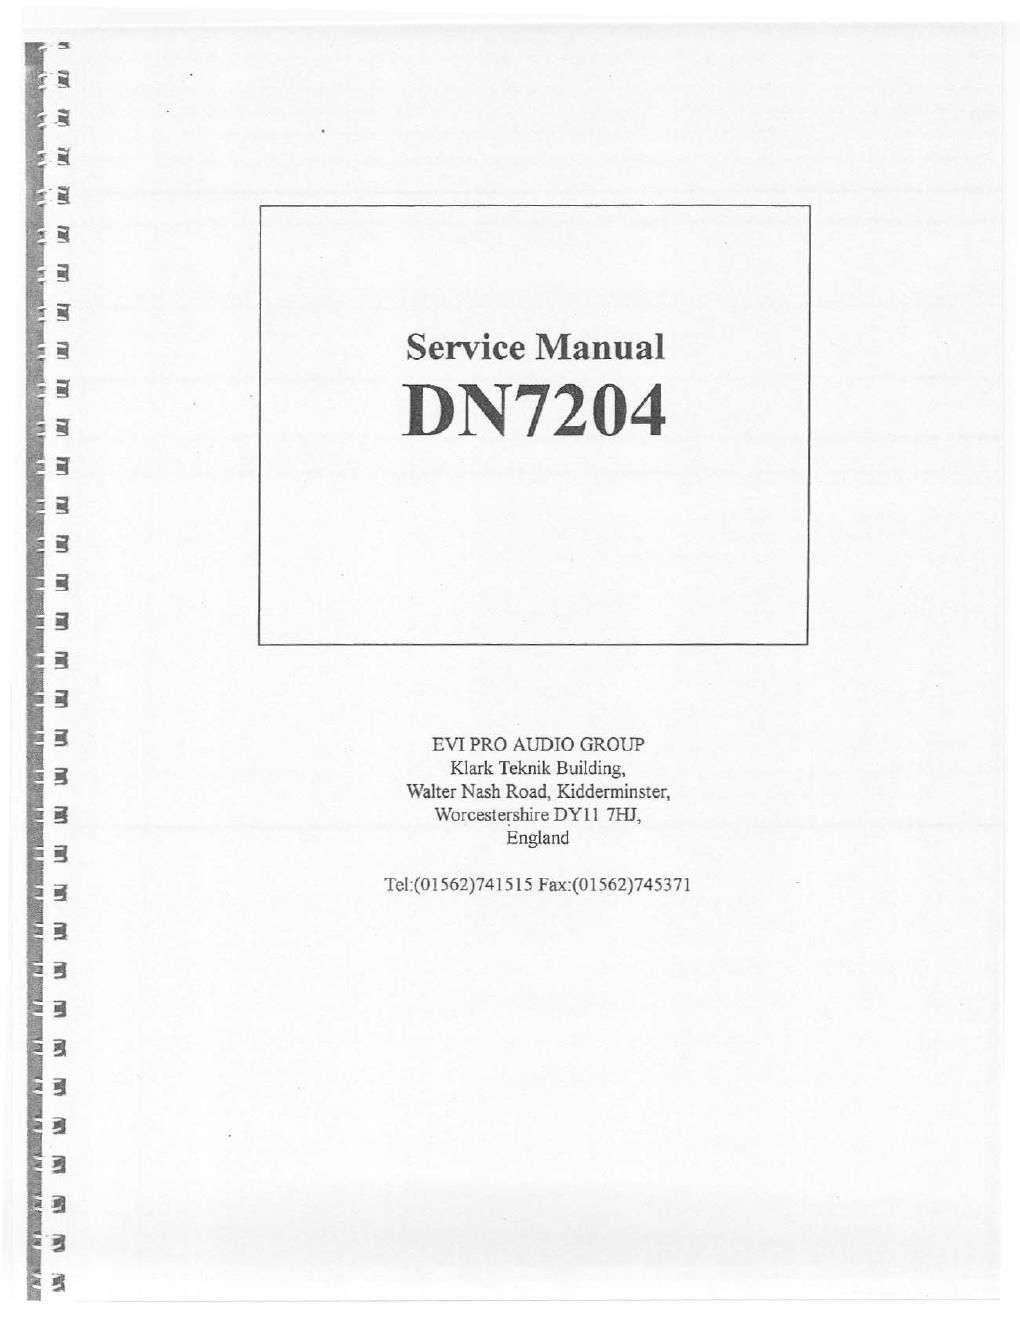 klark teknik dn 7204 service manual